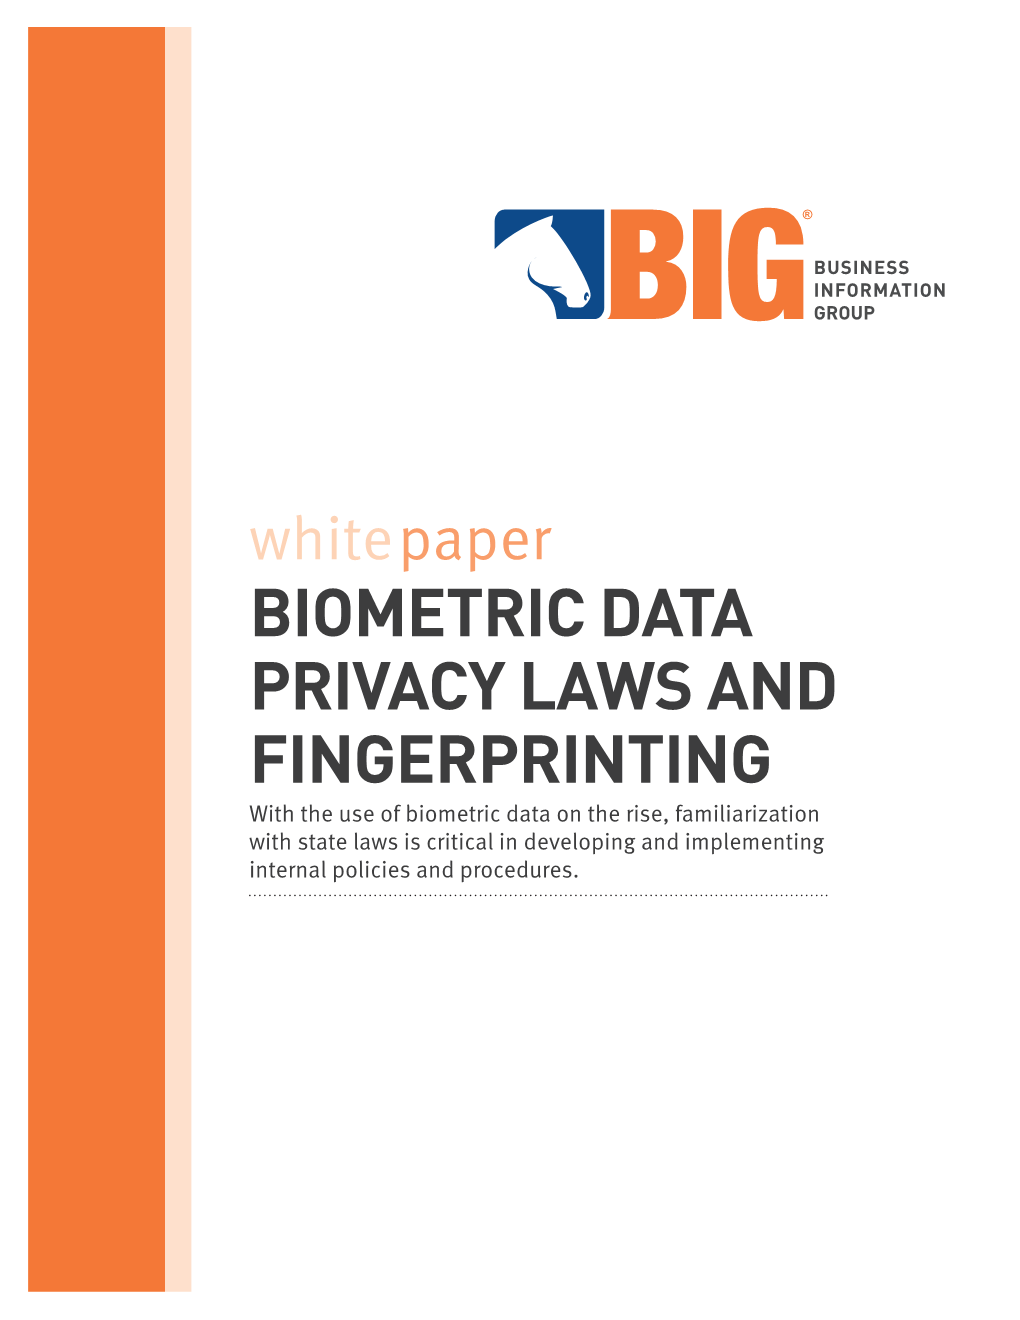 Biometric Data Privacy Laws and Fingerprinting